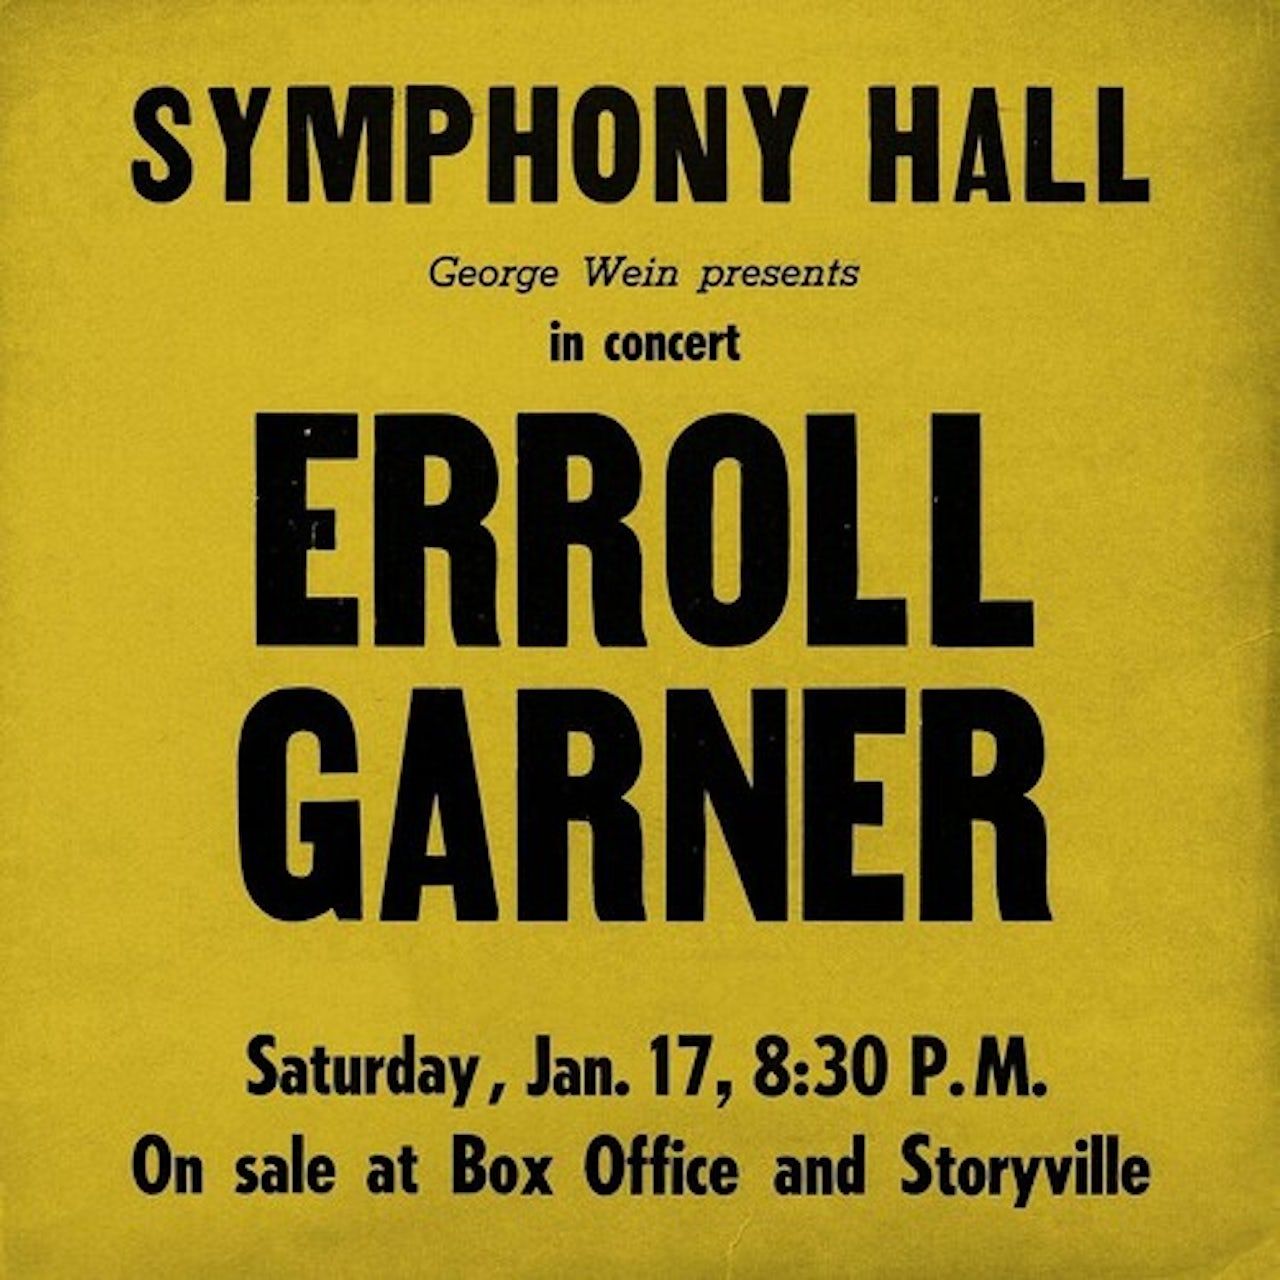 Виниловая пластинка Garner, Erroll, Symphony Hall Concert (0673203118911) erroll garner trio lp 2018 black виниловая пластинка